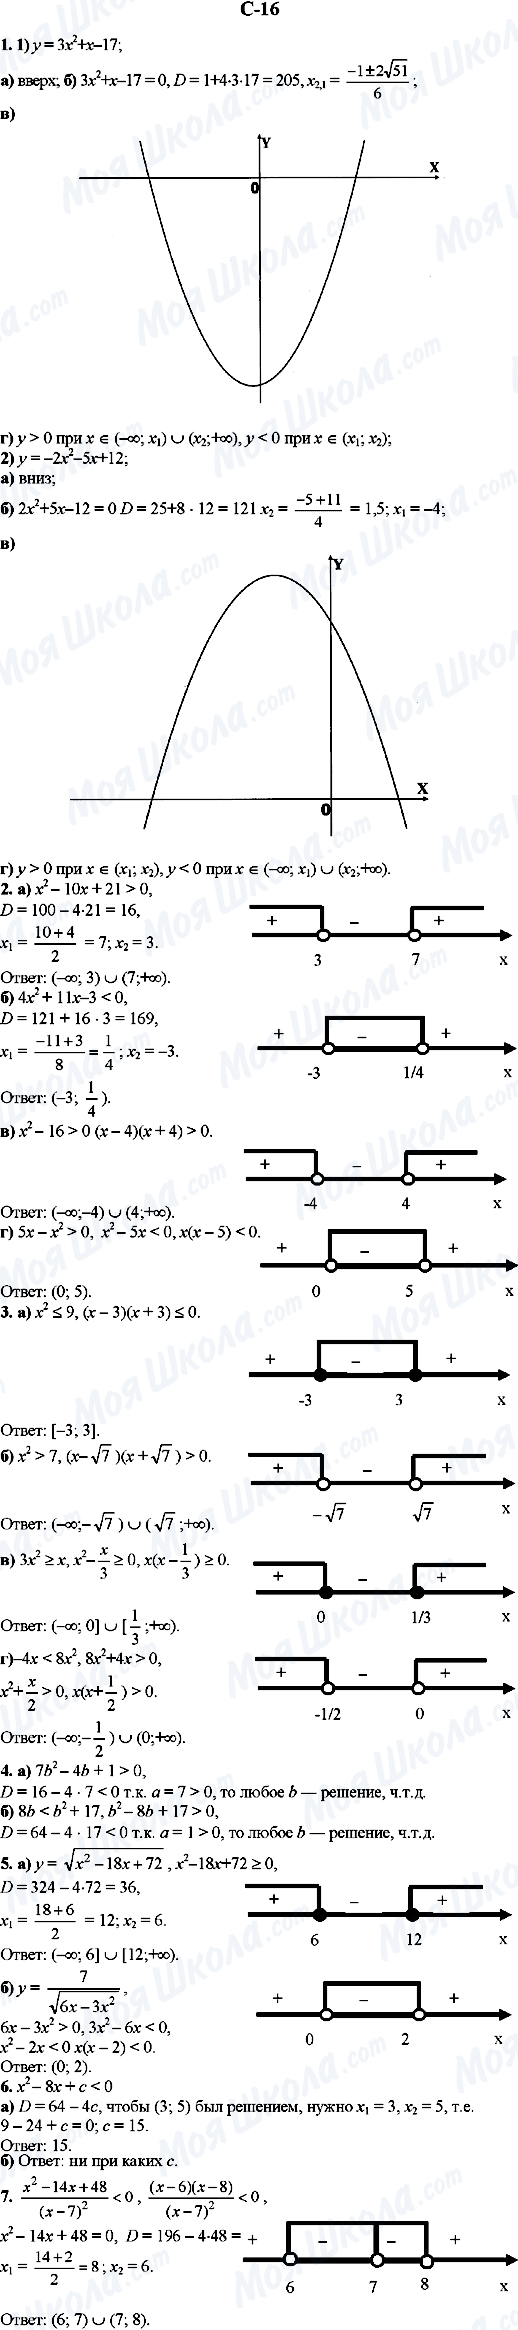 ГДЗ Алгебра 9 клас сторінка C-16